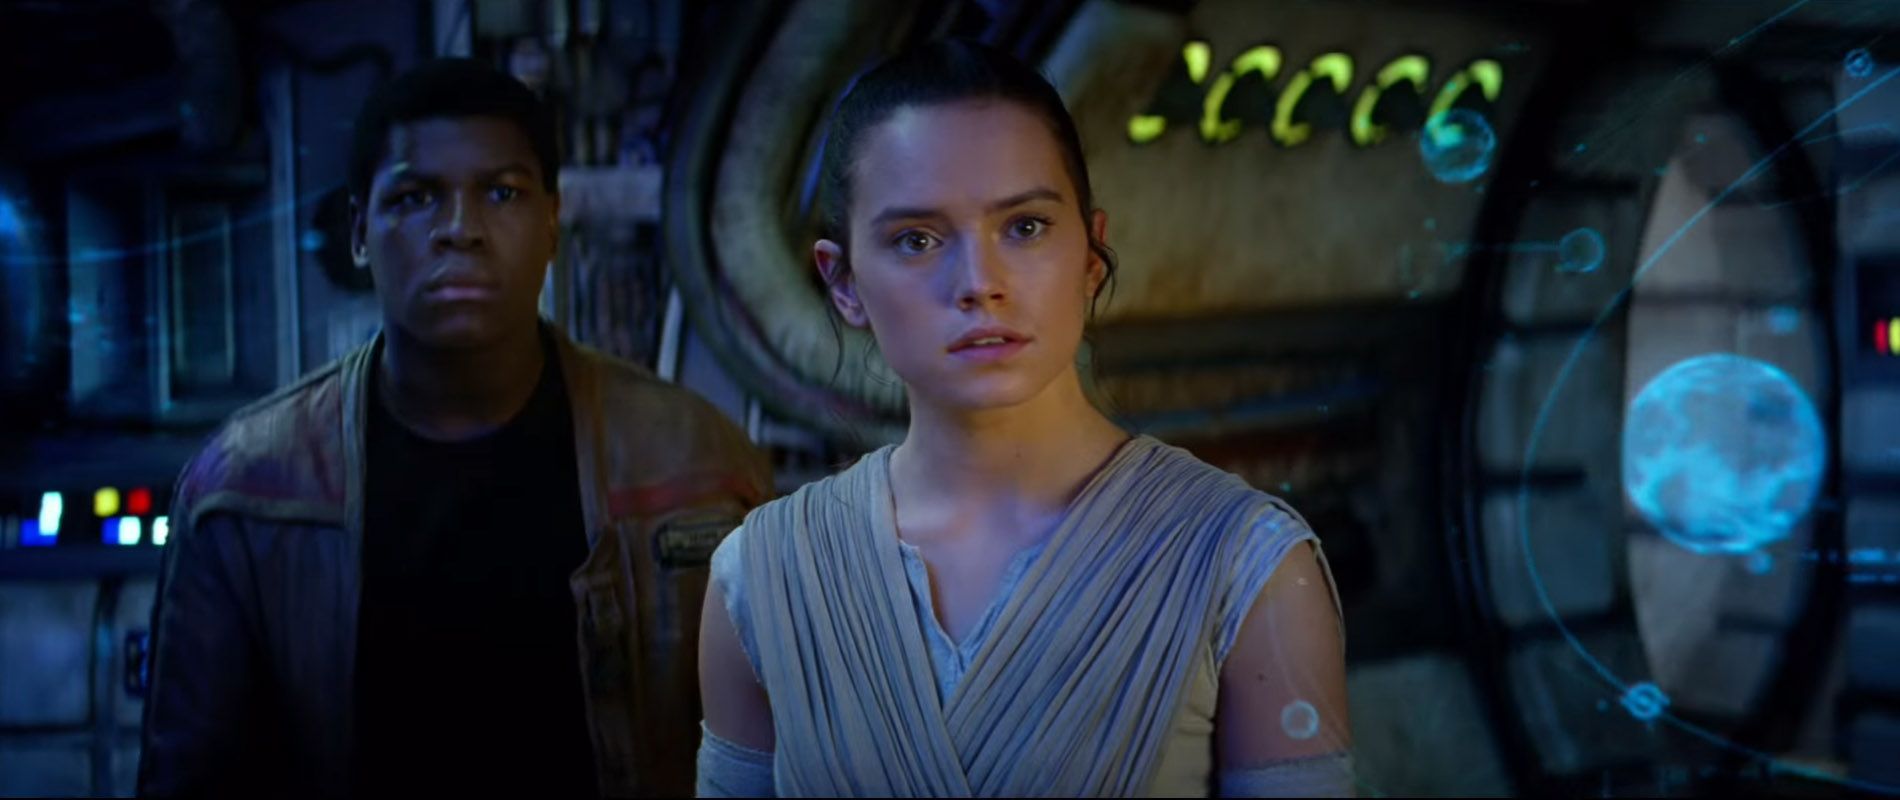 Star Wars 7 Trailer 3 - Finn Rey Millennium Falcon